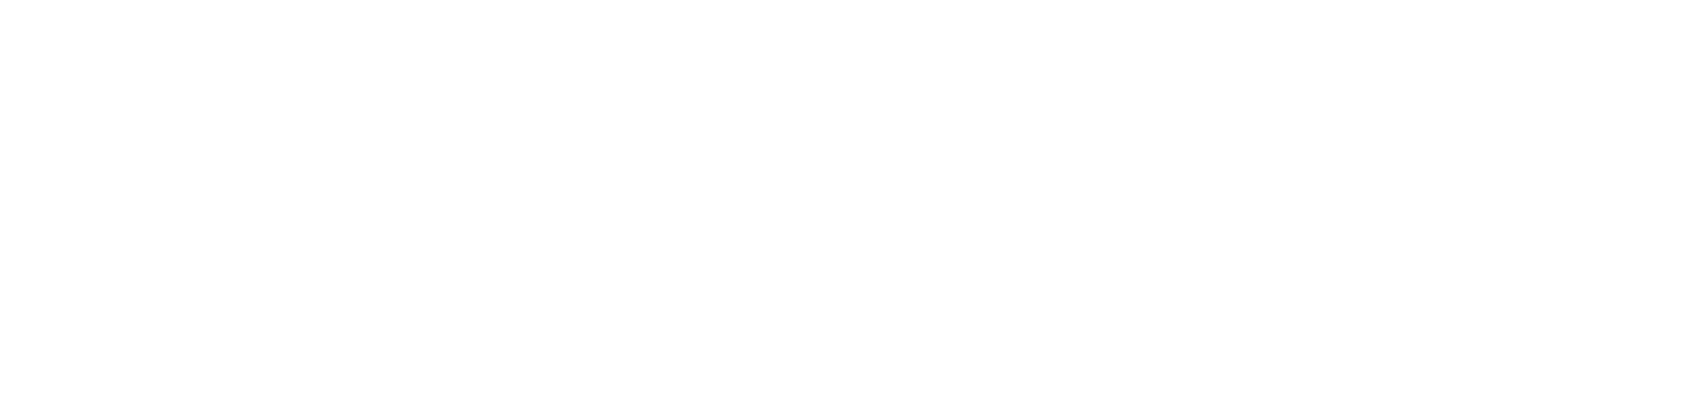 Wuliangye Yibin logo large for dark backgrounds (transparent PNG)